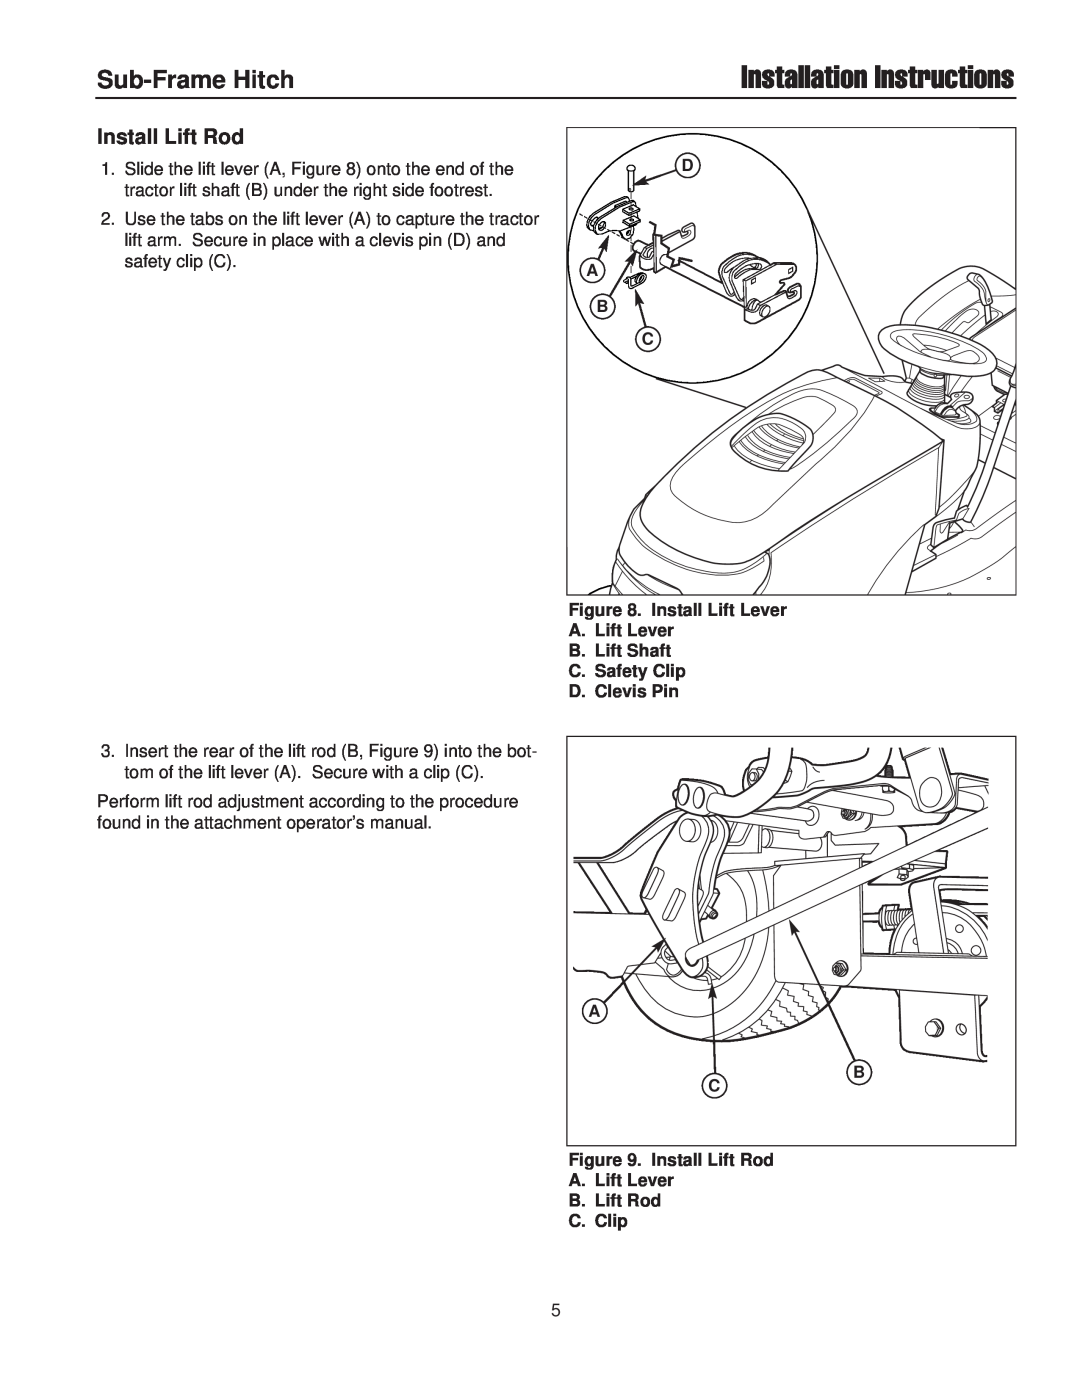 Snapper 1695195 installation instructions Installation Instructions, Sub-Frame Hitch, Install Lift Rod 